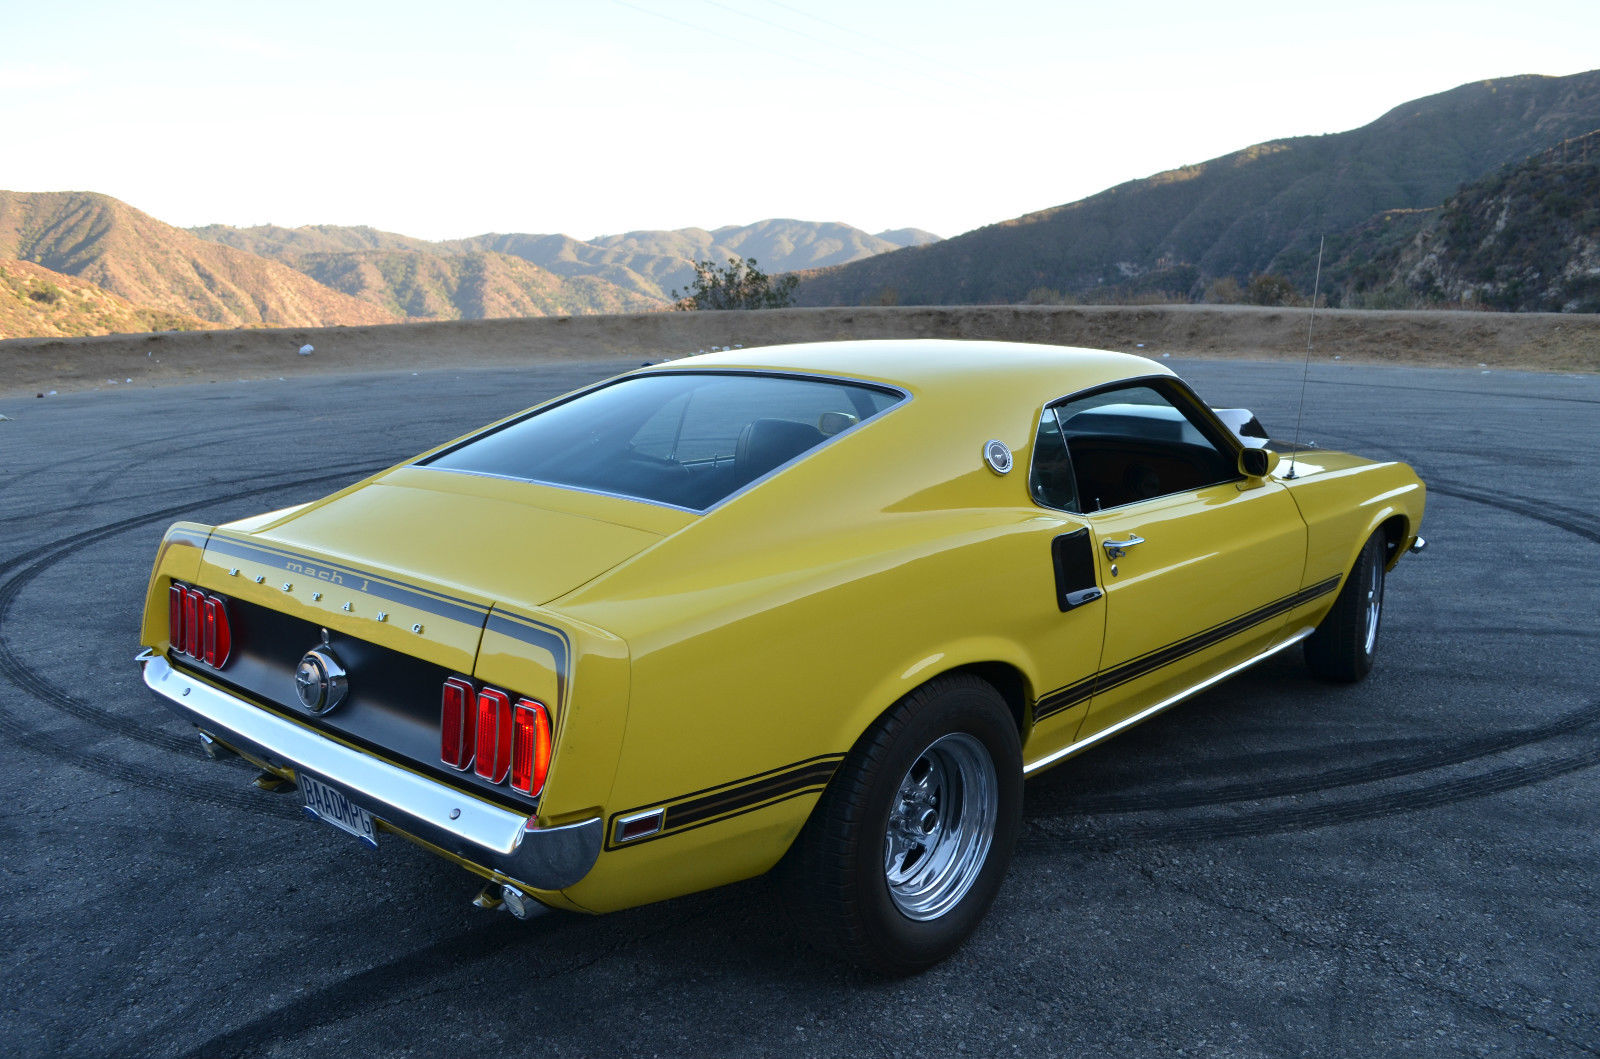 1969 Ford Mustang Boss 429 - характеристики, фото, цена.